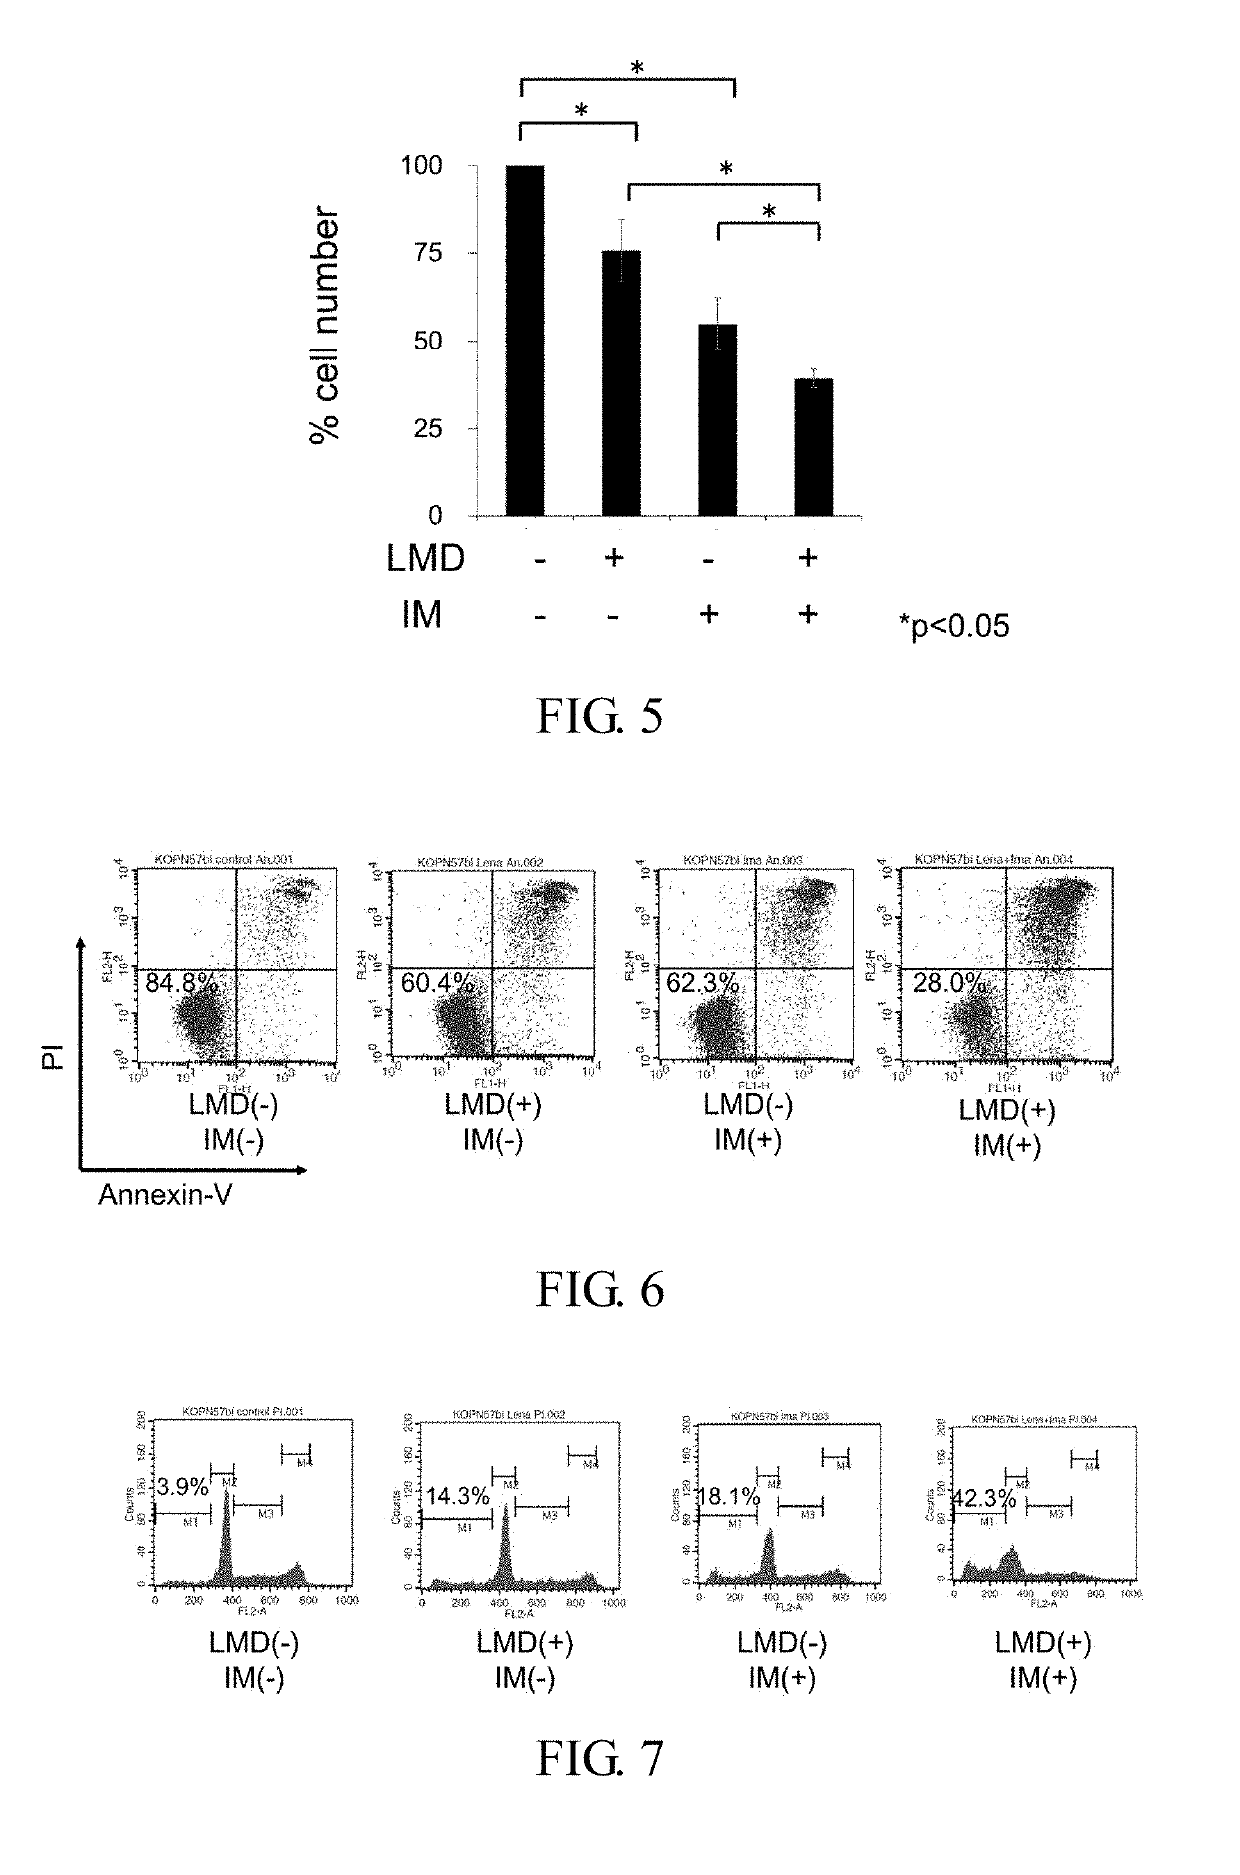 Therapeutic agent or treatment method for Philadelphia chromosome-positive (Ph+) acute lymphocytic leukemia (ALL) having IKZF1 mutation